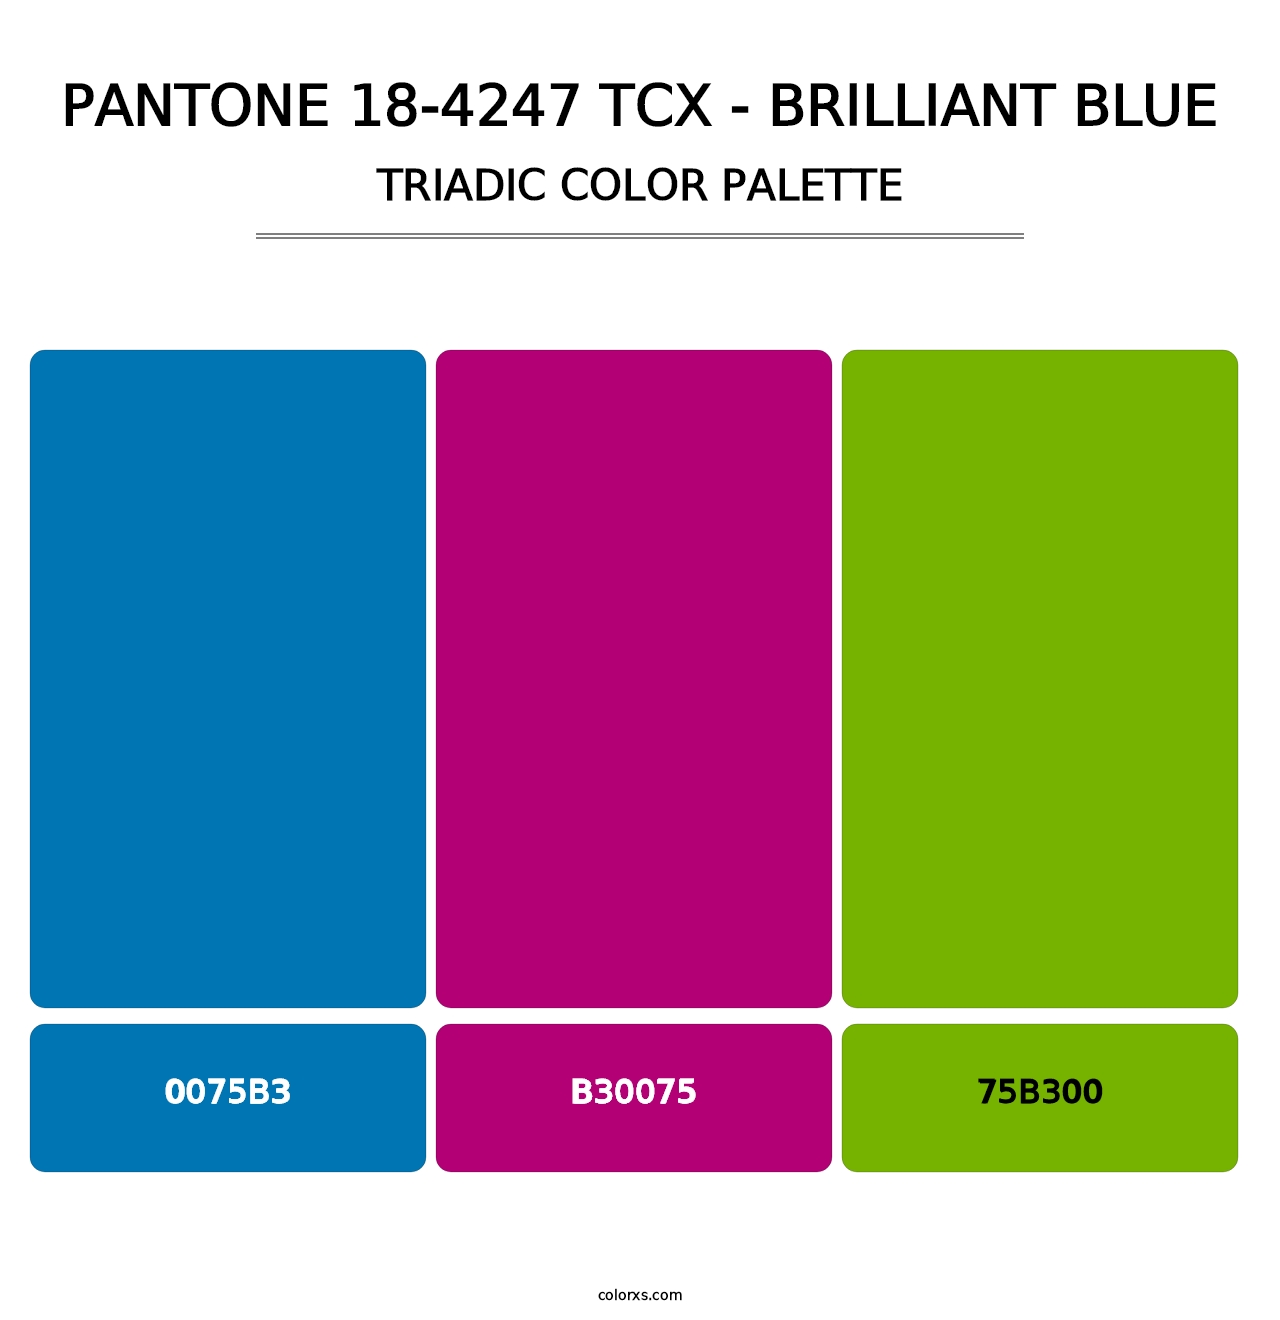 PANTONE 18-4247 TCX - Brilliant Blue - Triadic Color Palette